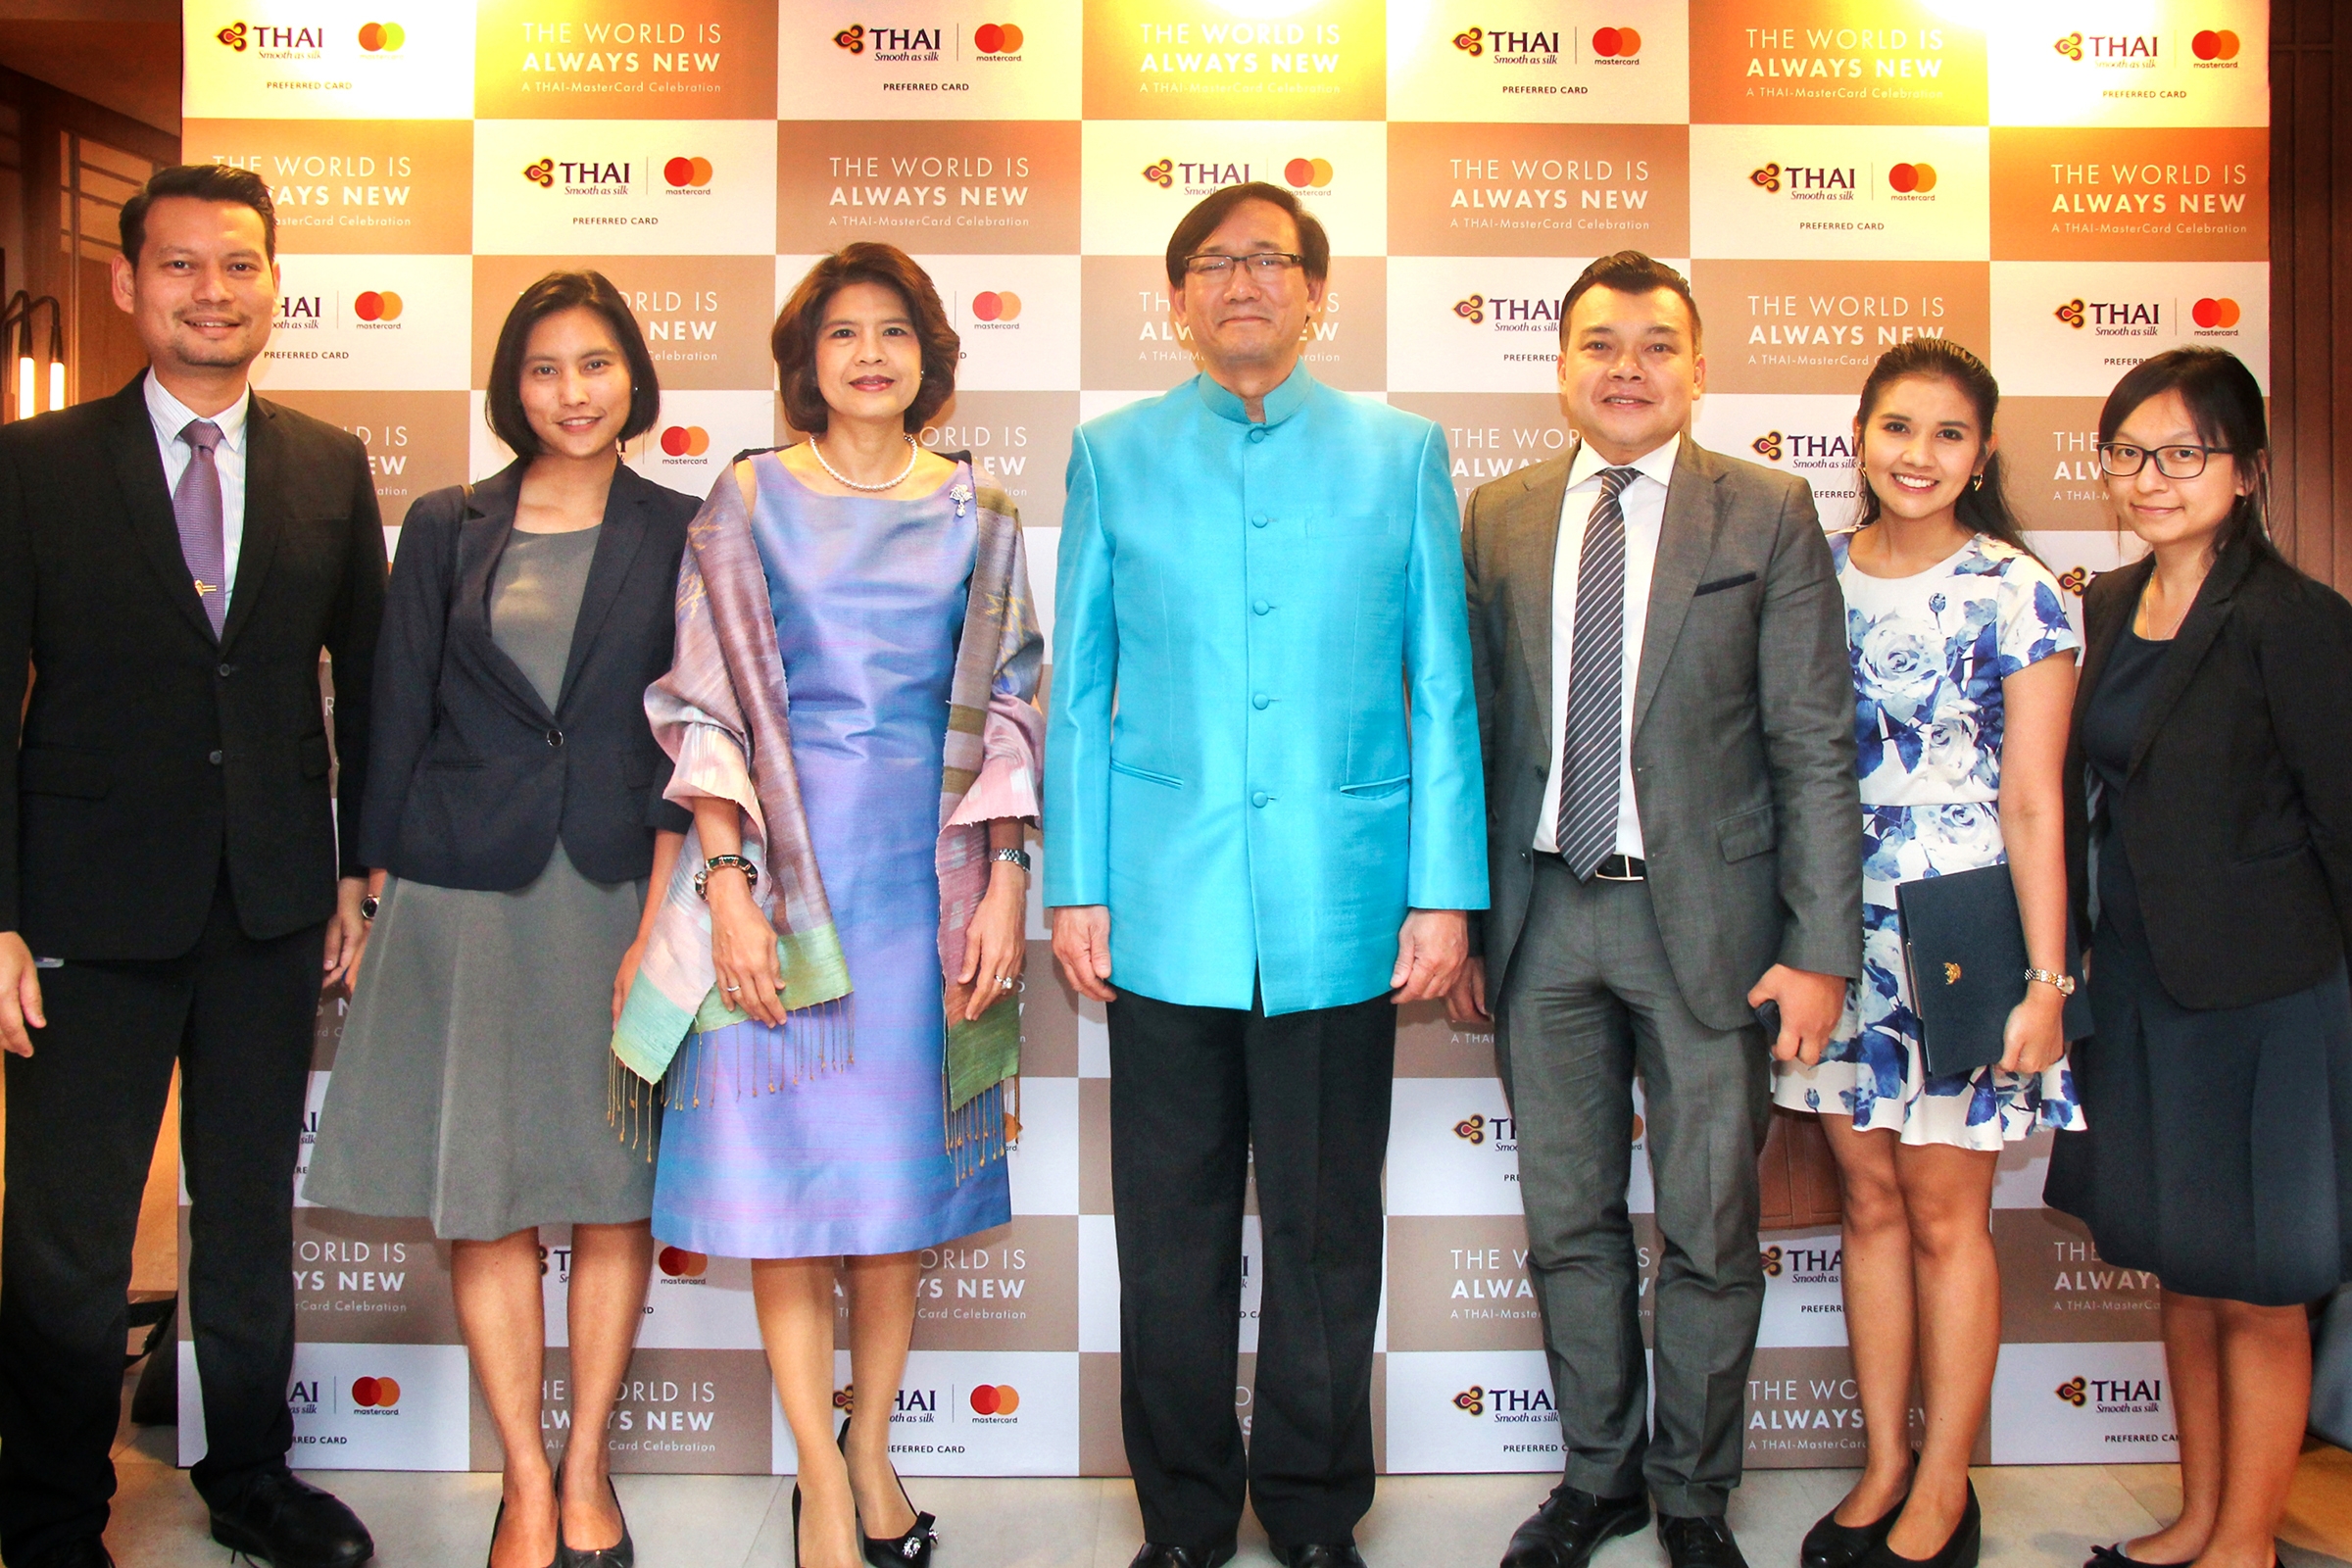 Nivat Chantarachoti with Thai Ambassador and Thai Embassy Officials